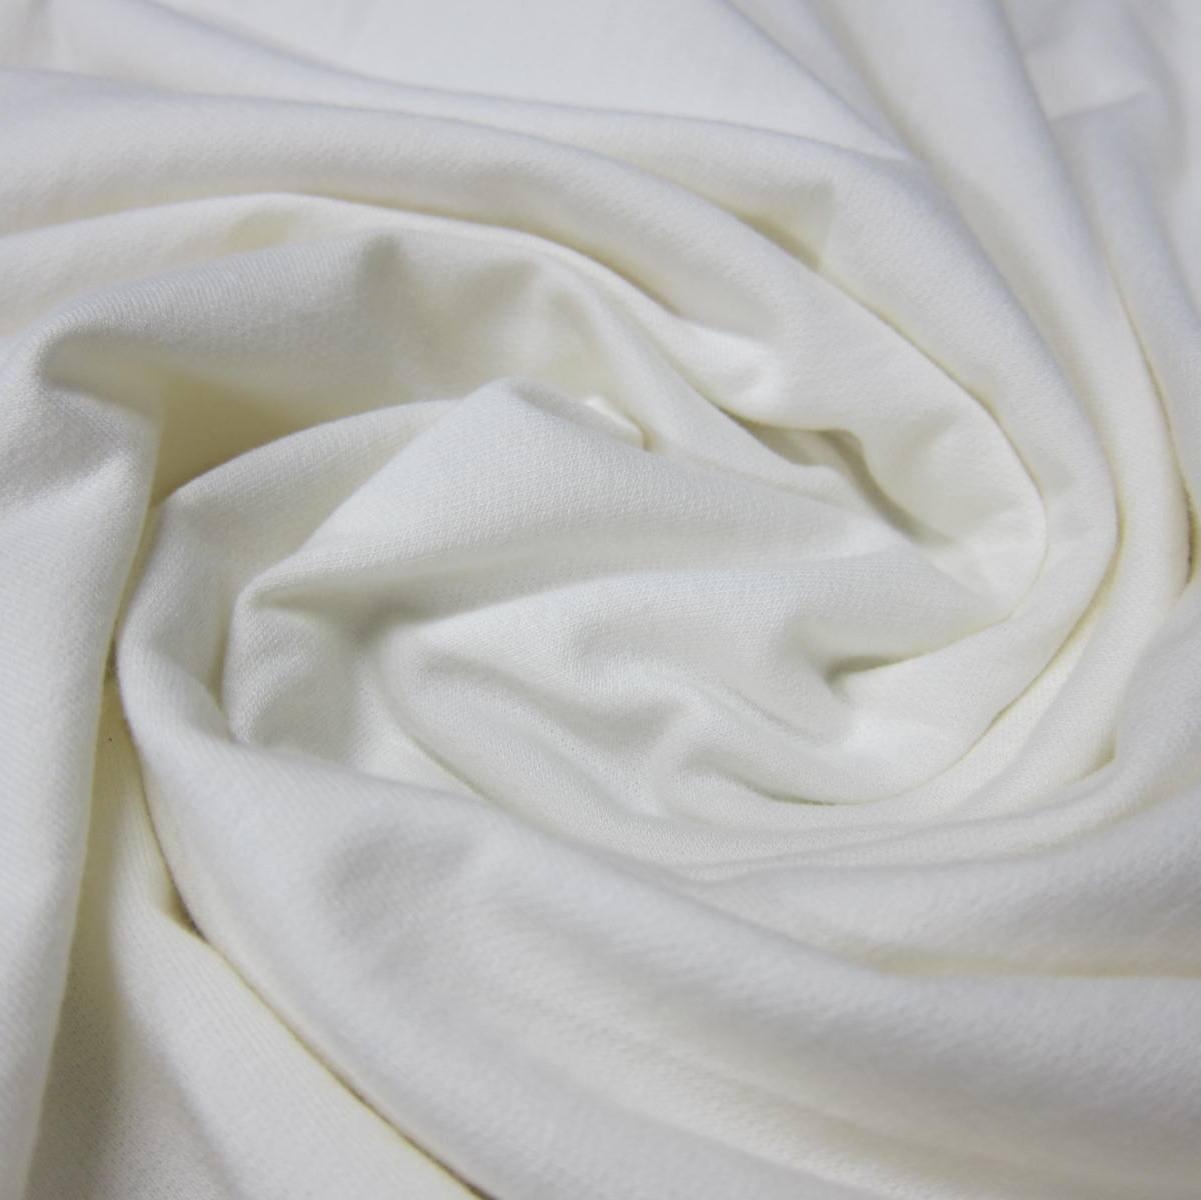 Bamboo Fleece Fabric - 500 GSM, $11.72/yd - Rolls - Nature's Fabrics